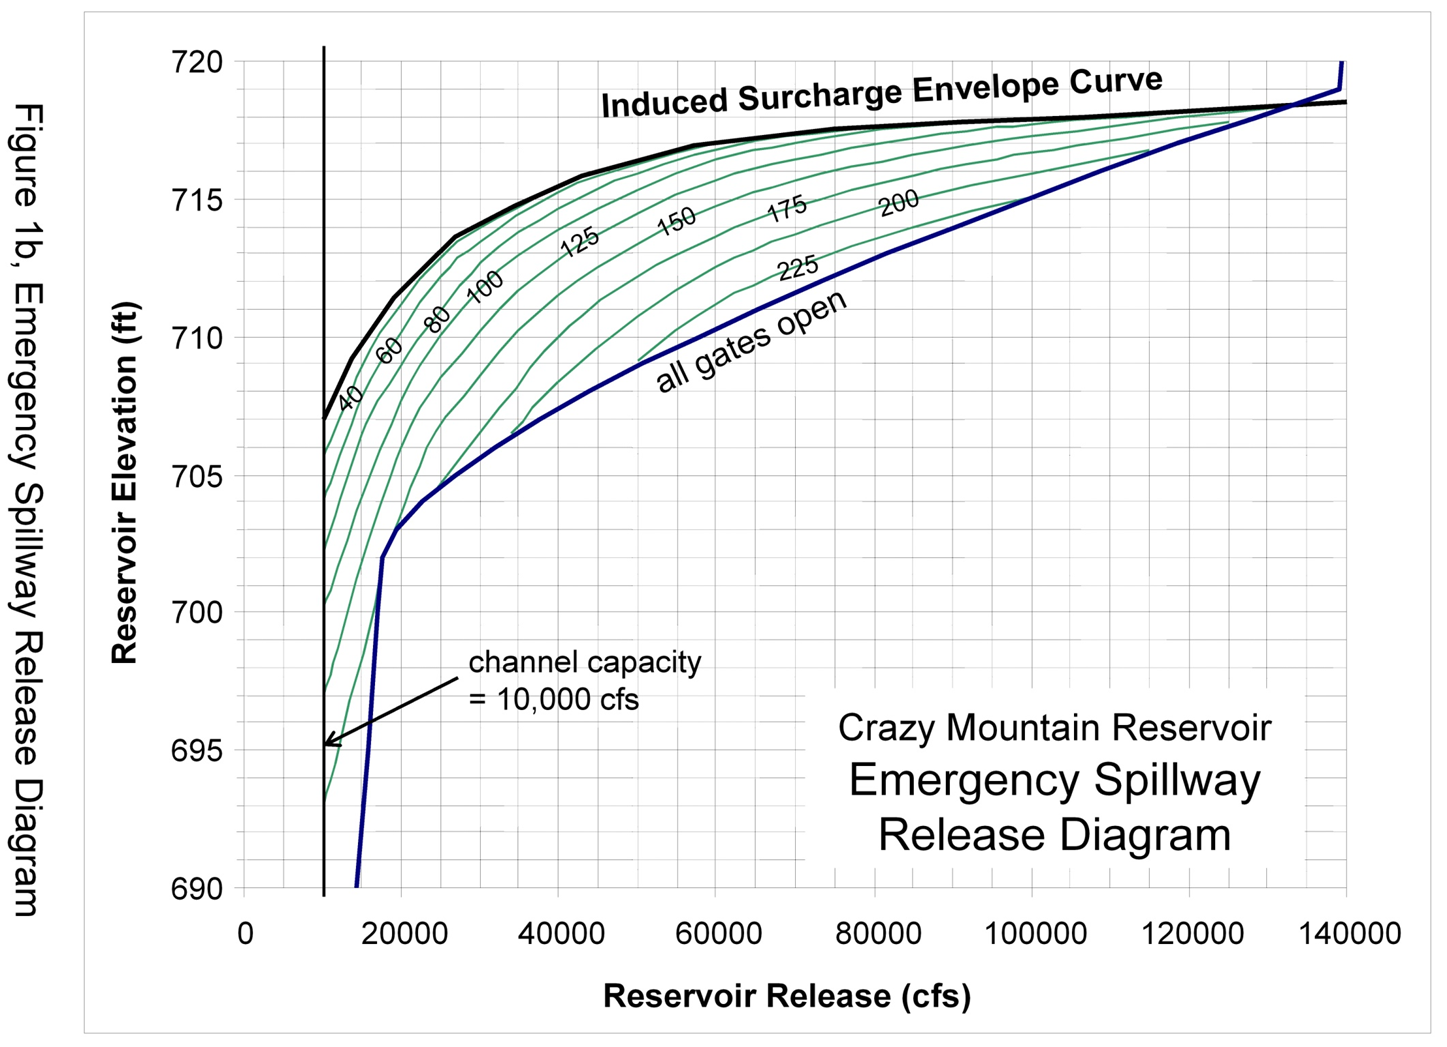 Figure 1b, Emergency Spillway Release Diagram